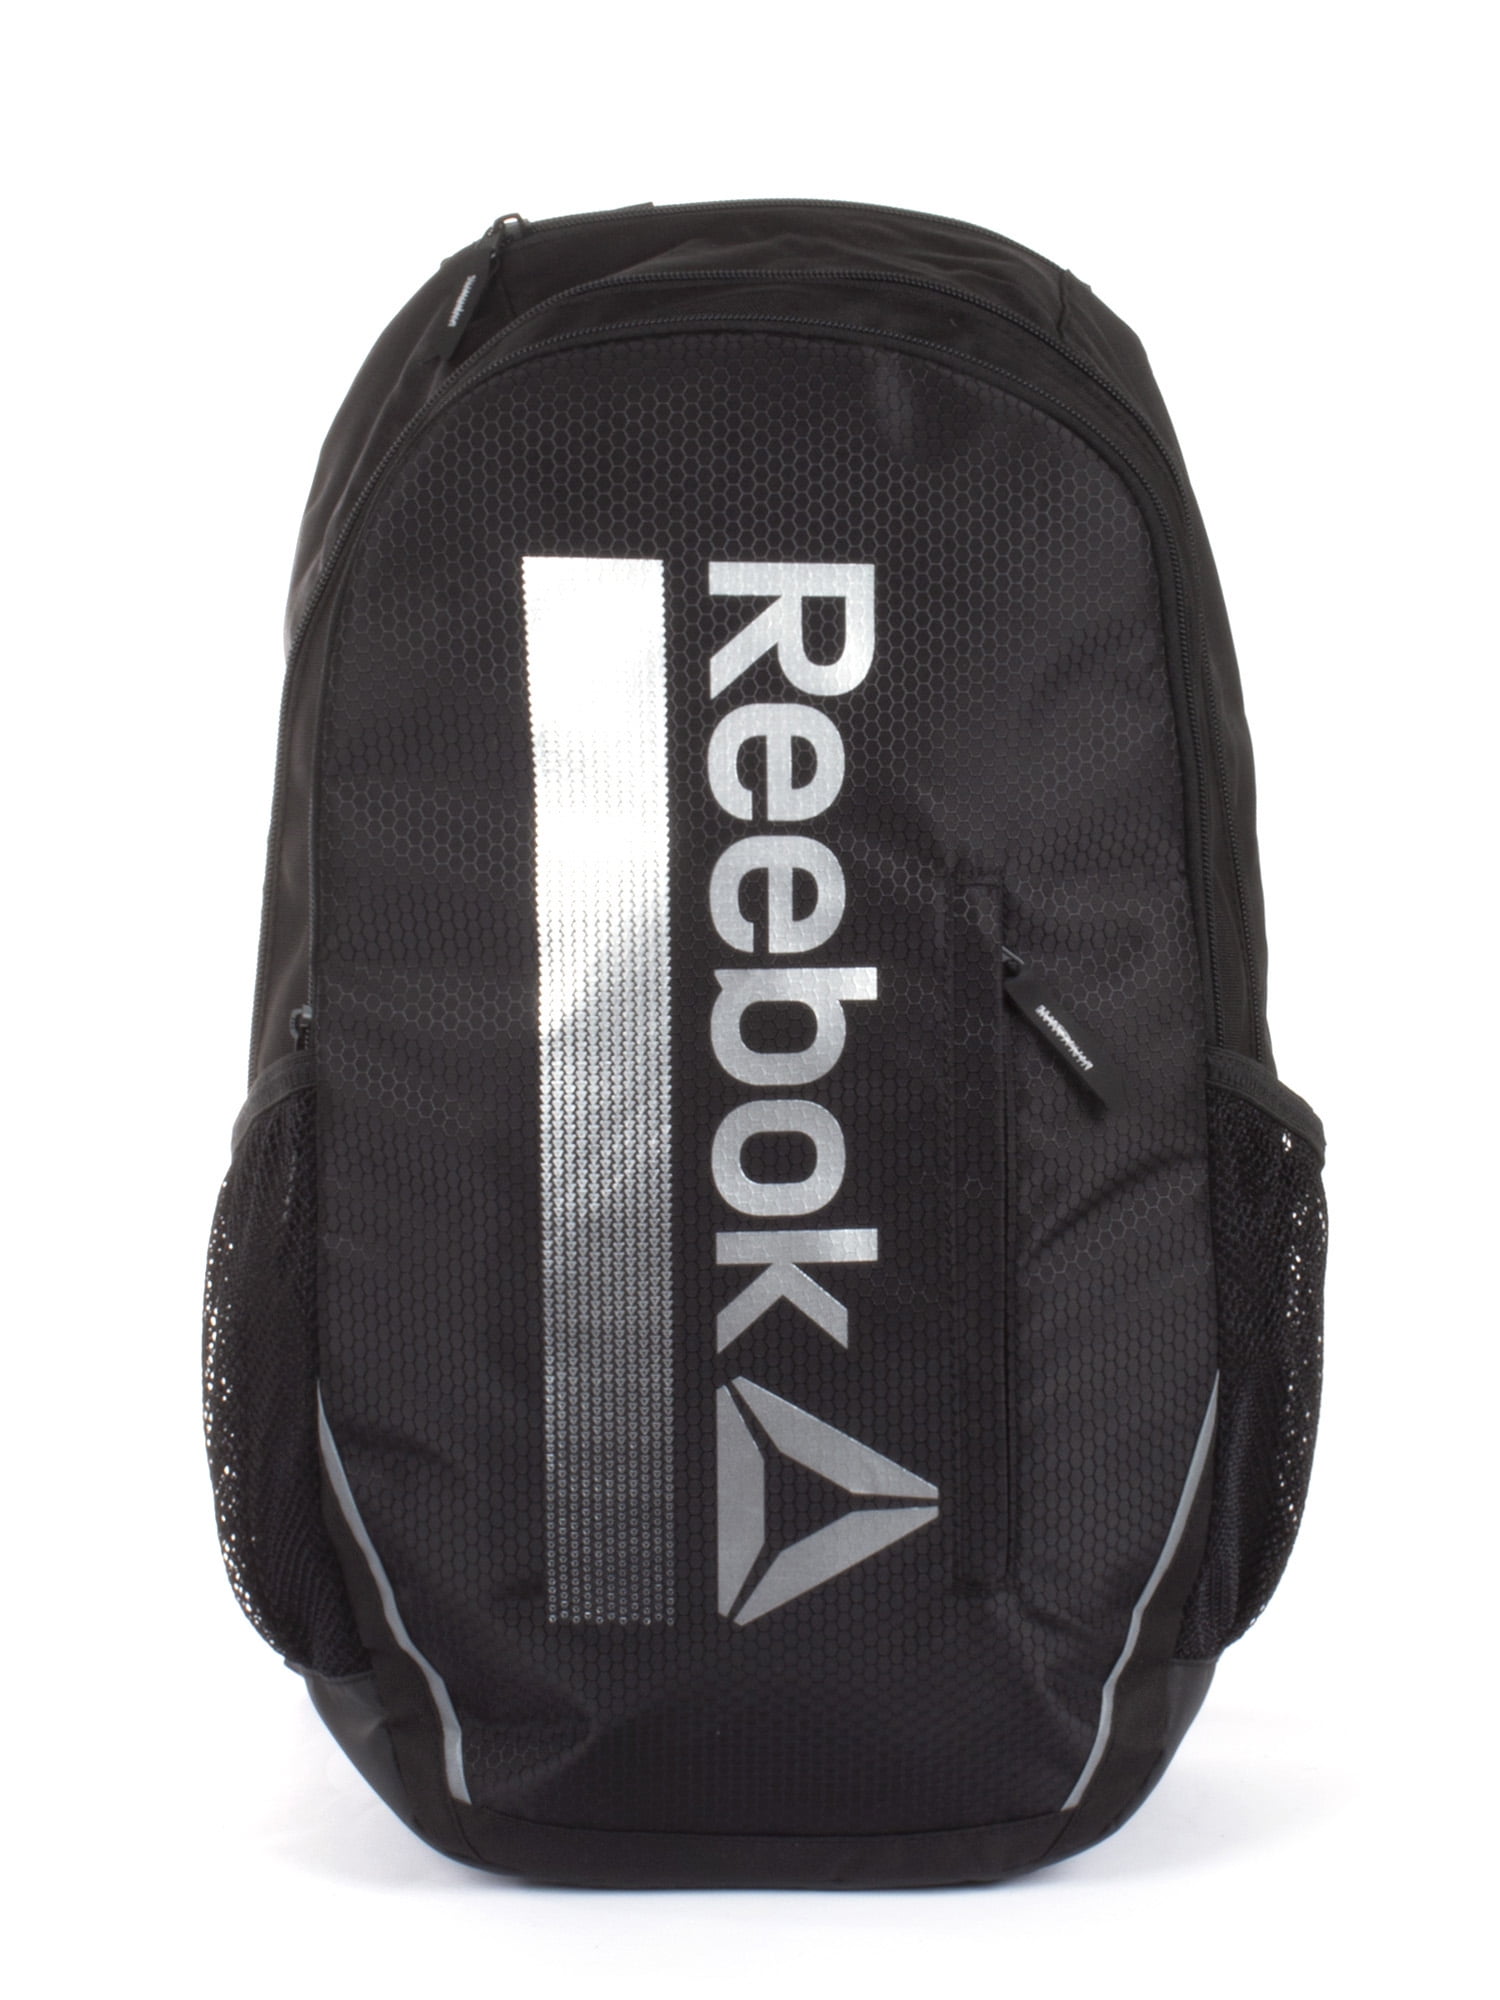 Reebok Trainer Black Backpack - Walmart.com